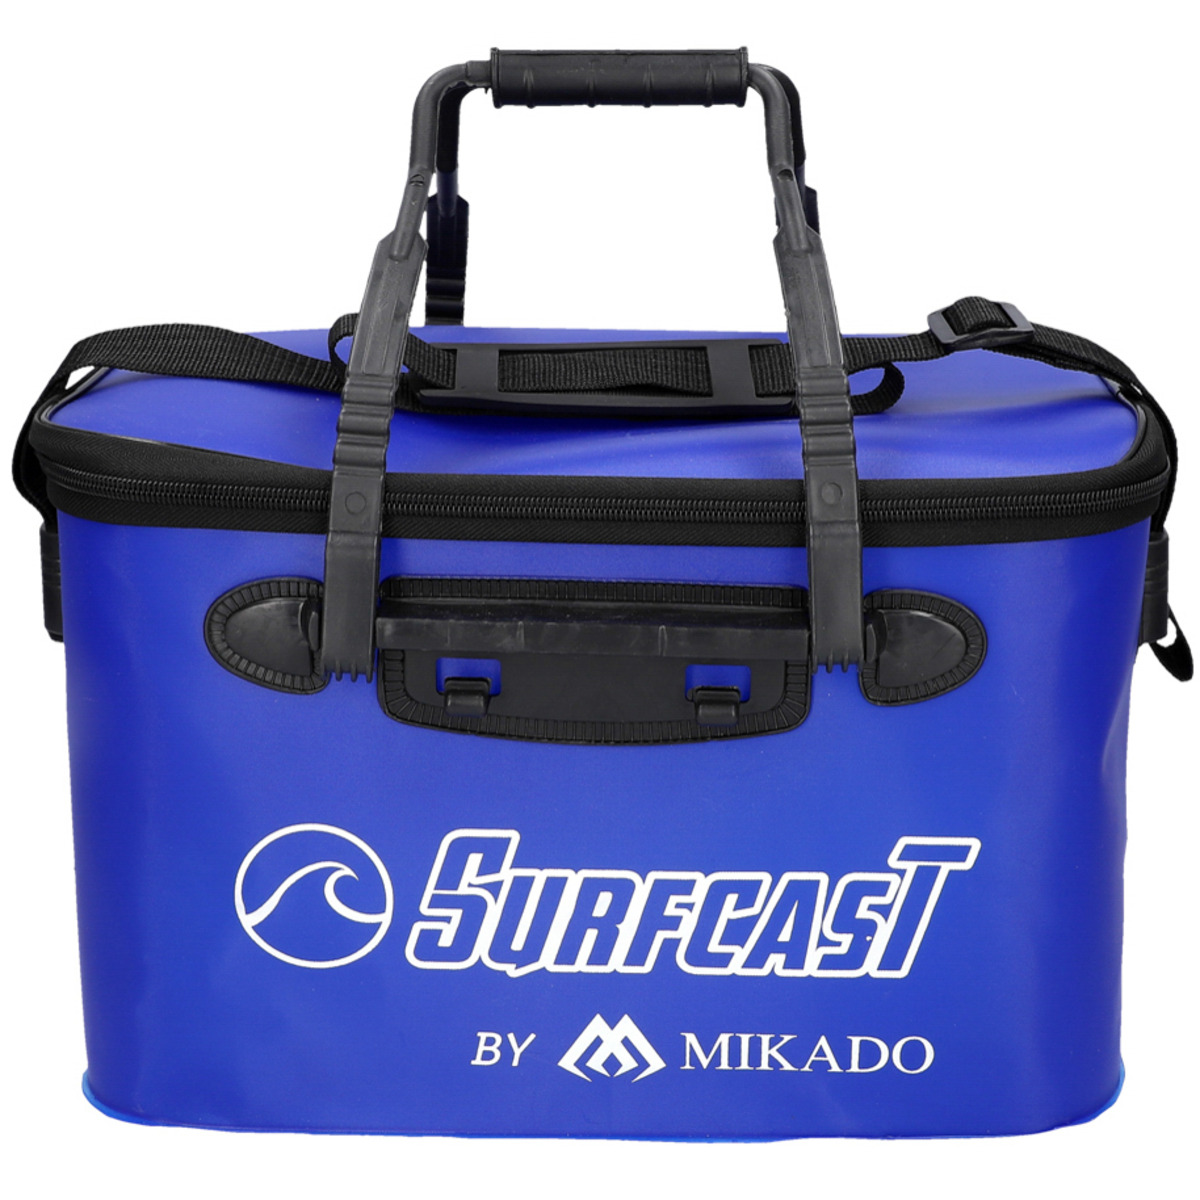 Mikado Bag Evasurfcast - 4 (40x24x24 cm)